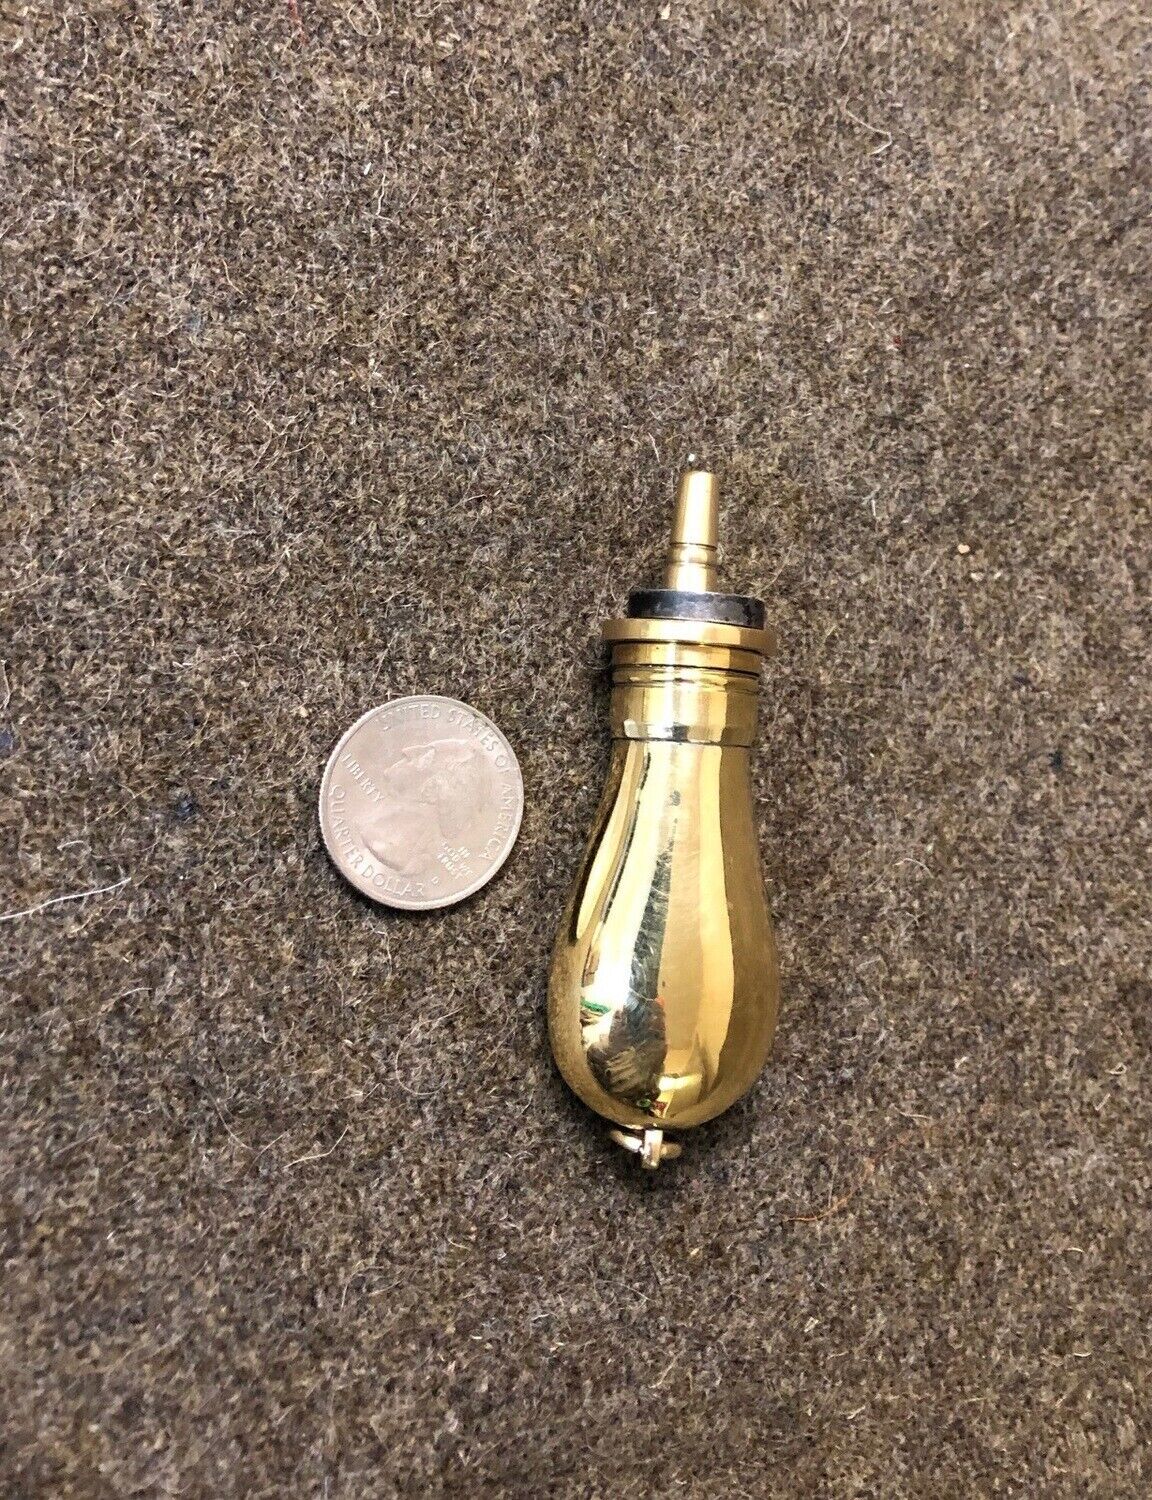 Miniature Brass Priming Flask - Flintlock Muzzleloading, Blackpowder Priming